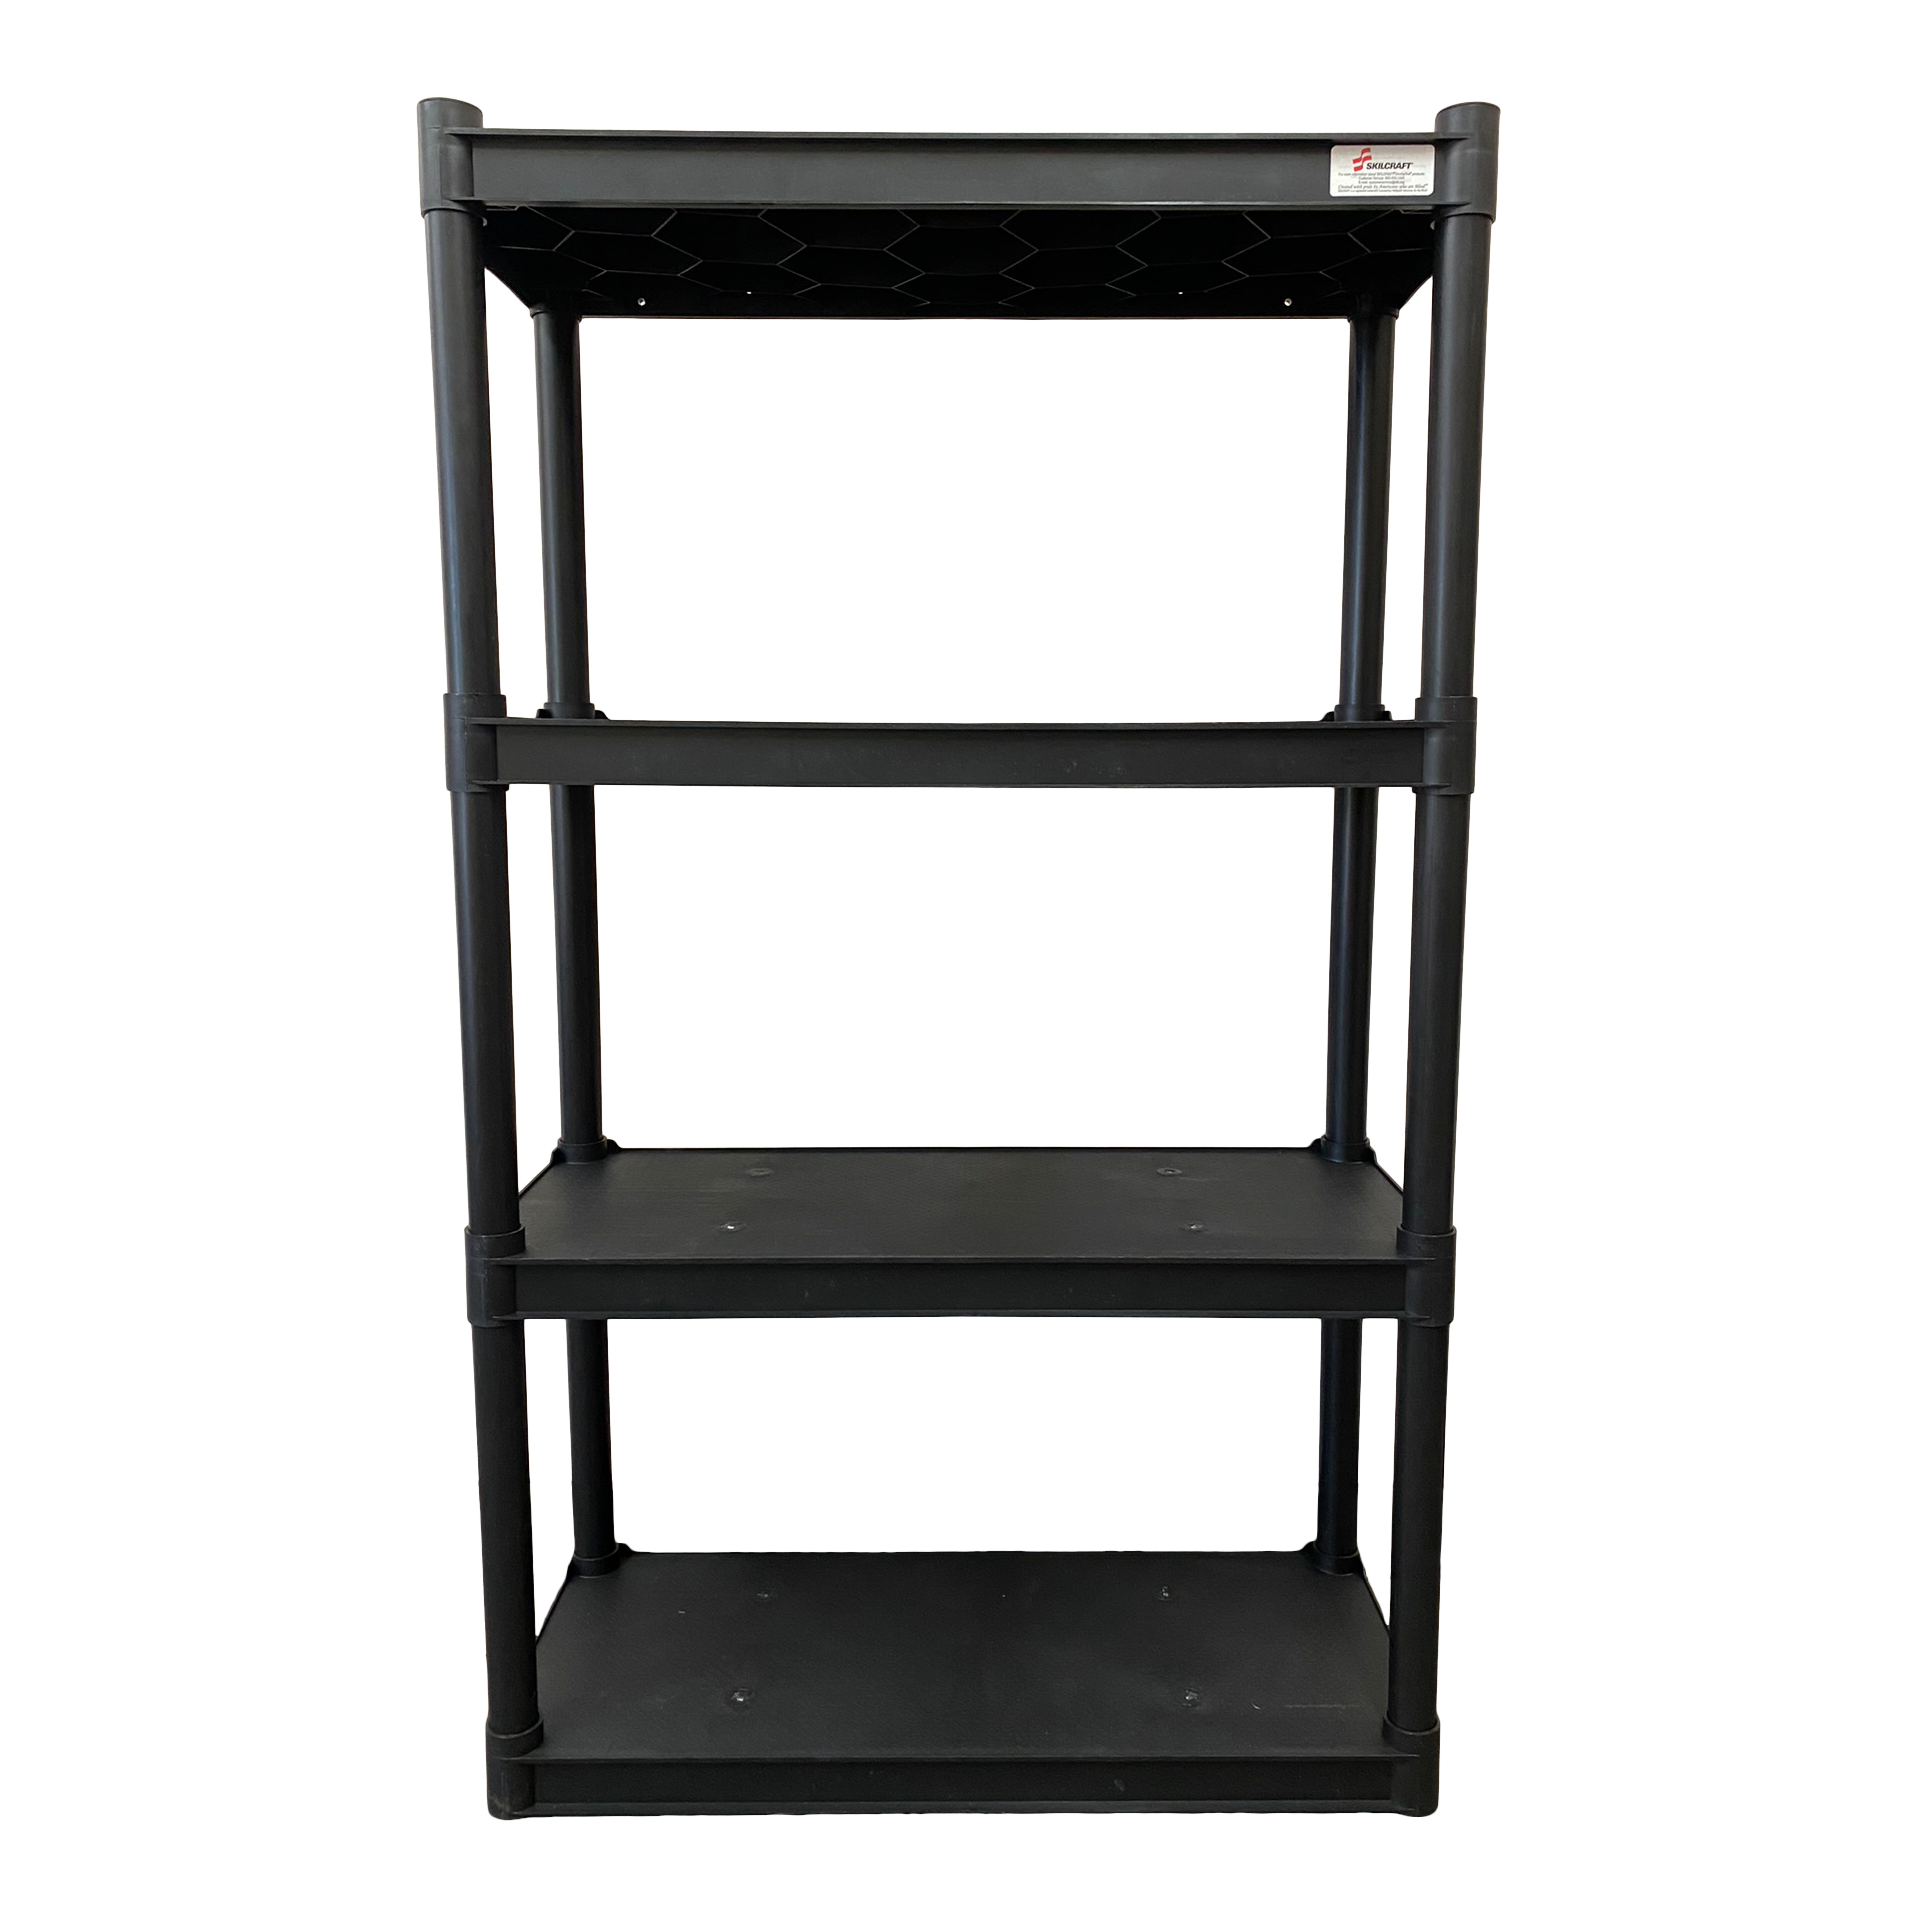 A black four-shelf open storage unit.